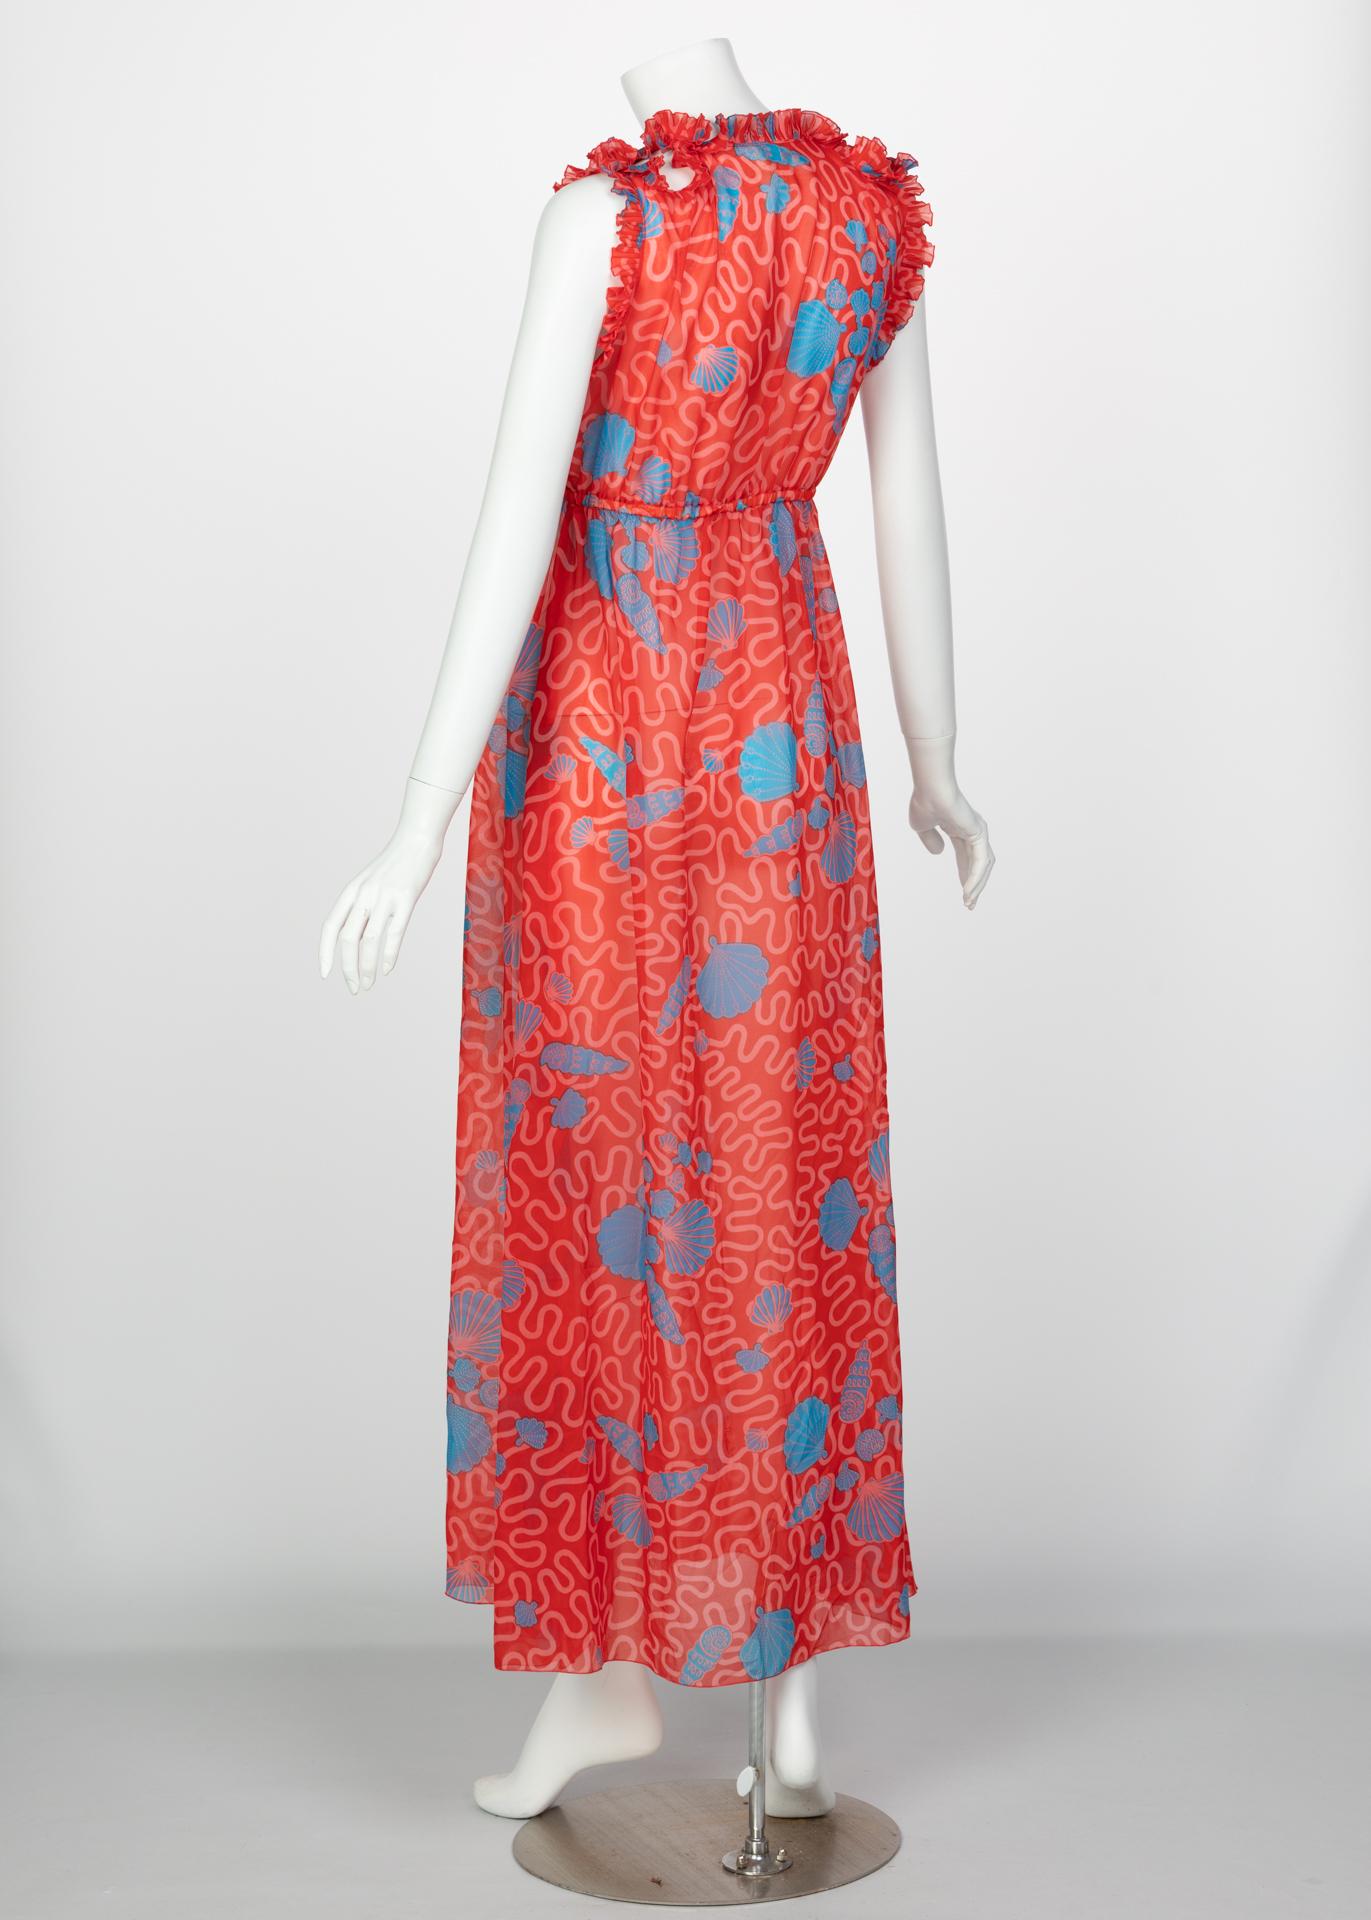 Zandra Rhodes Red Pleated Shell print Caftan and Sleeveless Dress Set, 1970s 5